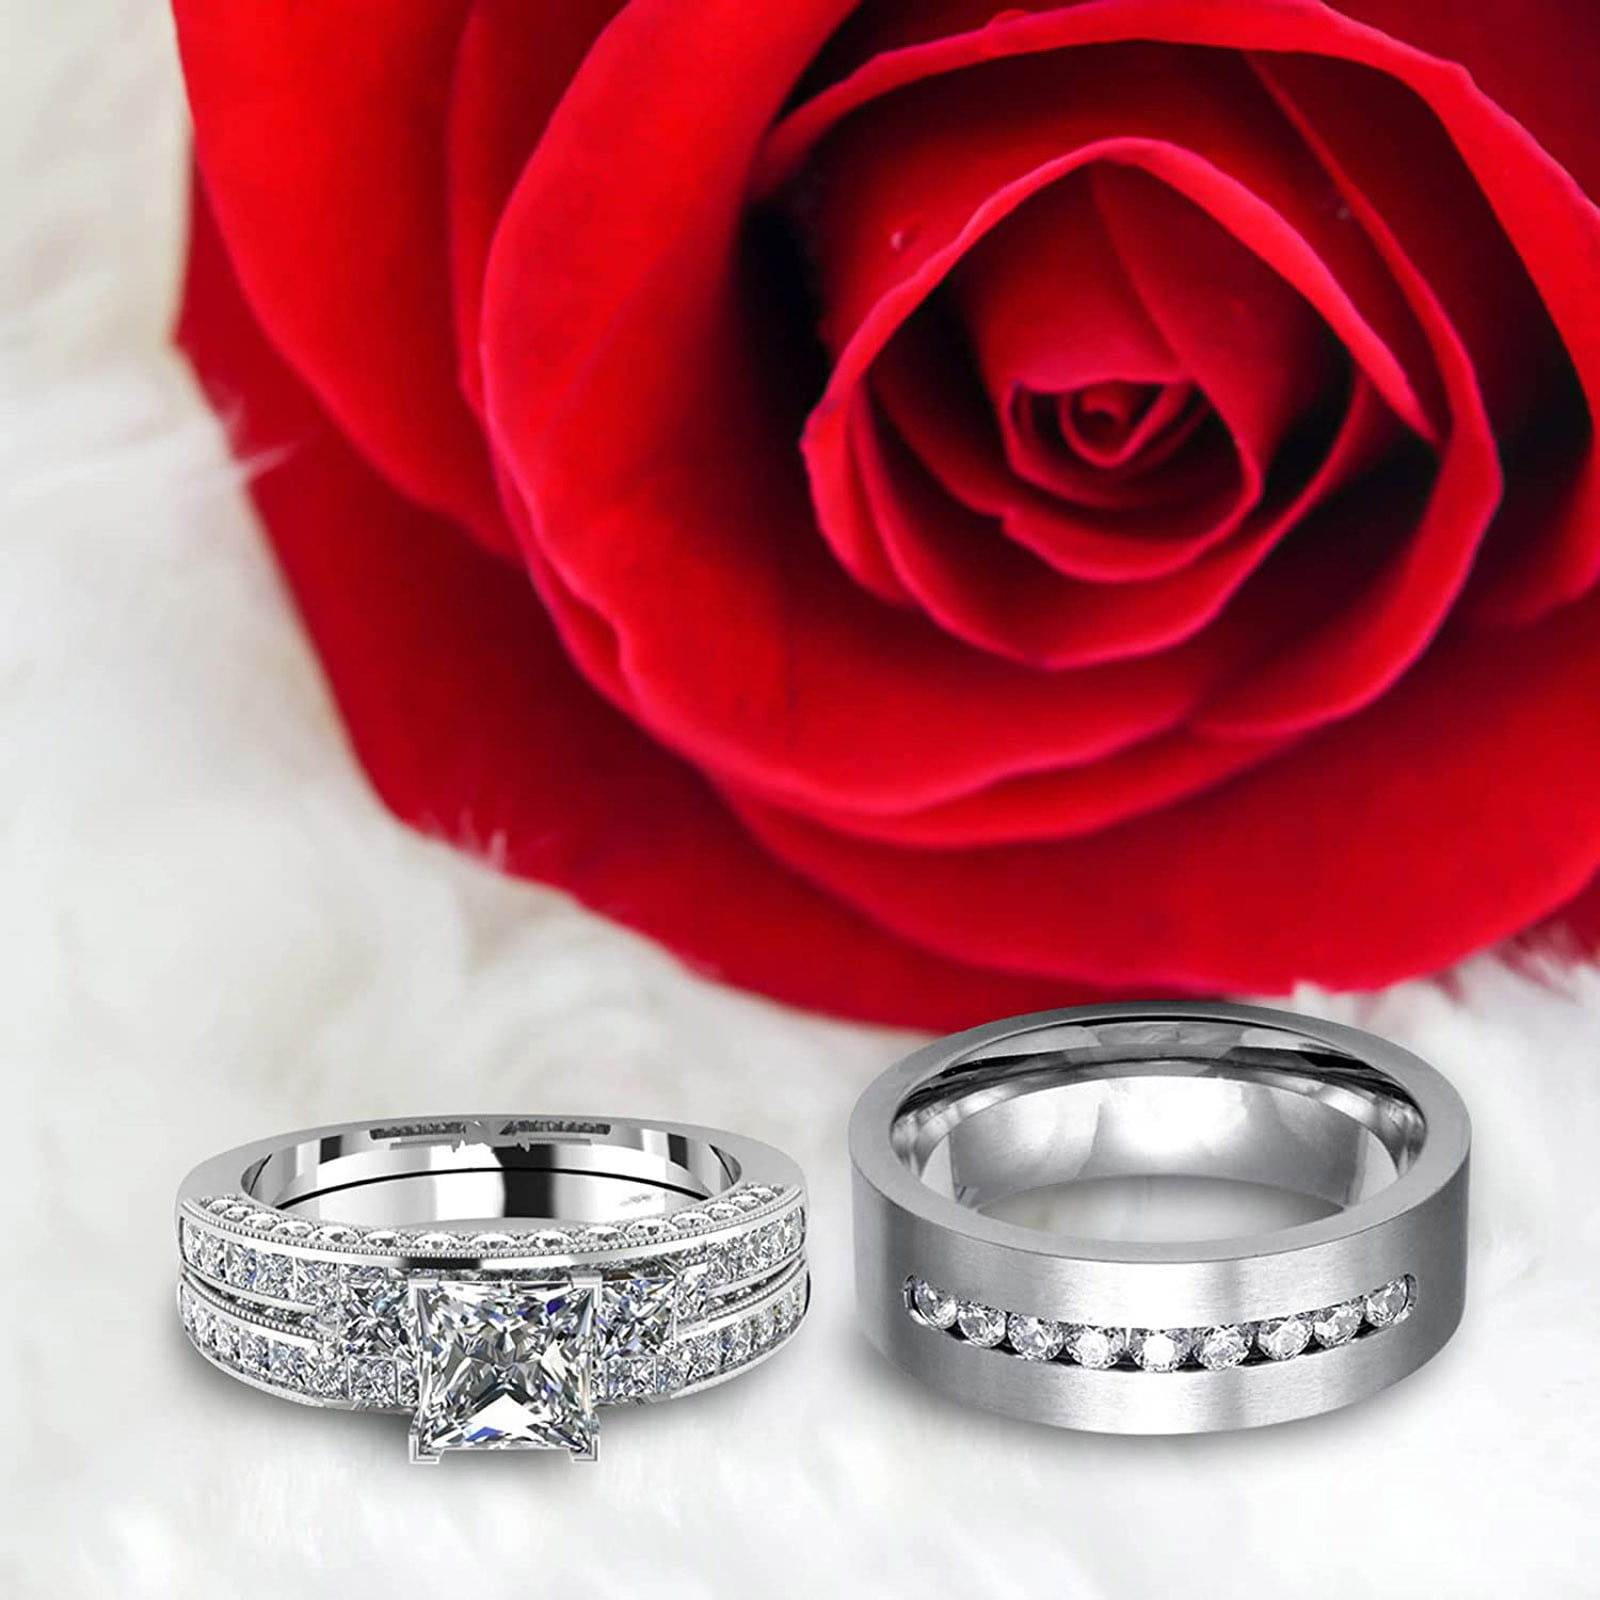 Unique Engagement Rings, Vintage Style Rings, Alternative Wedding Ring | La  More Design